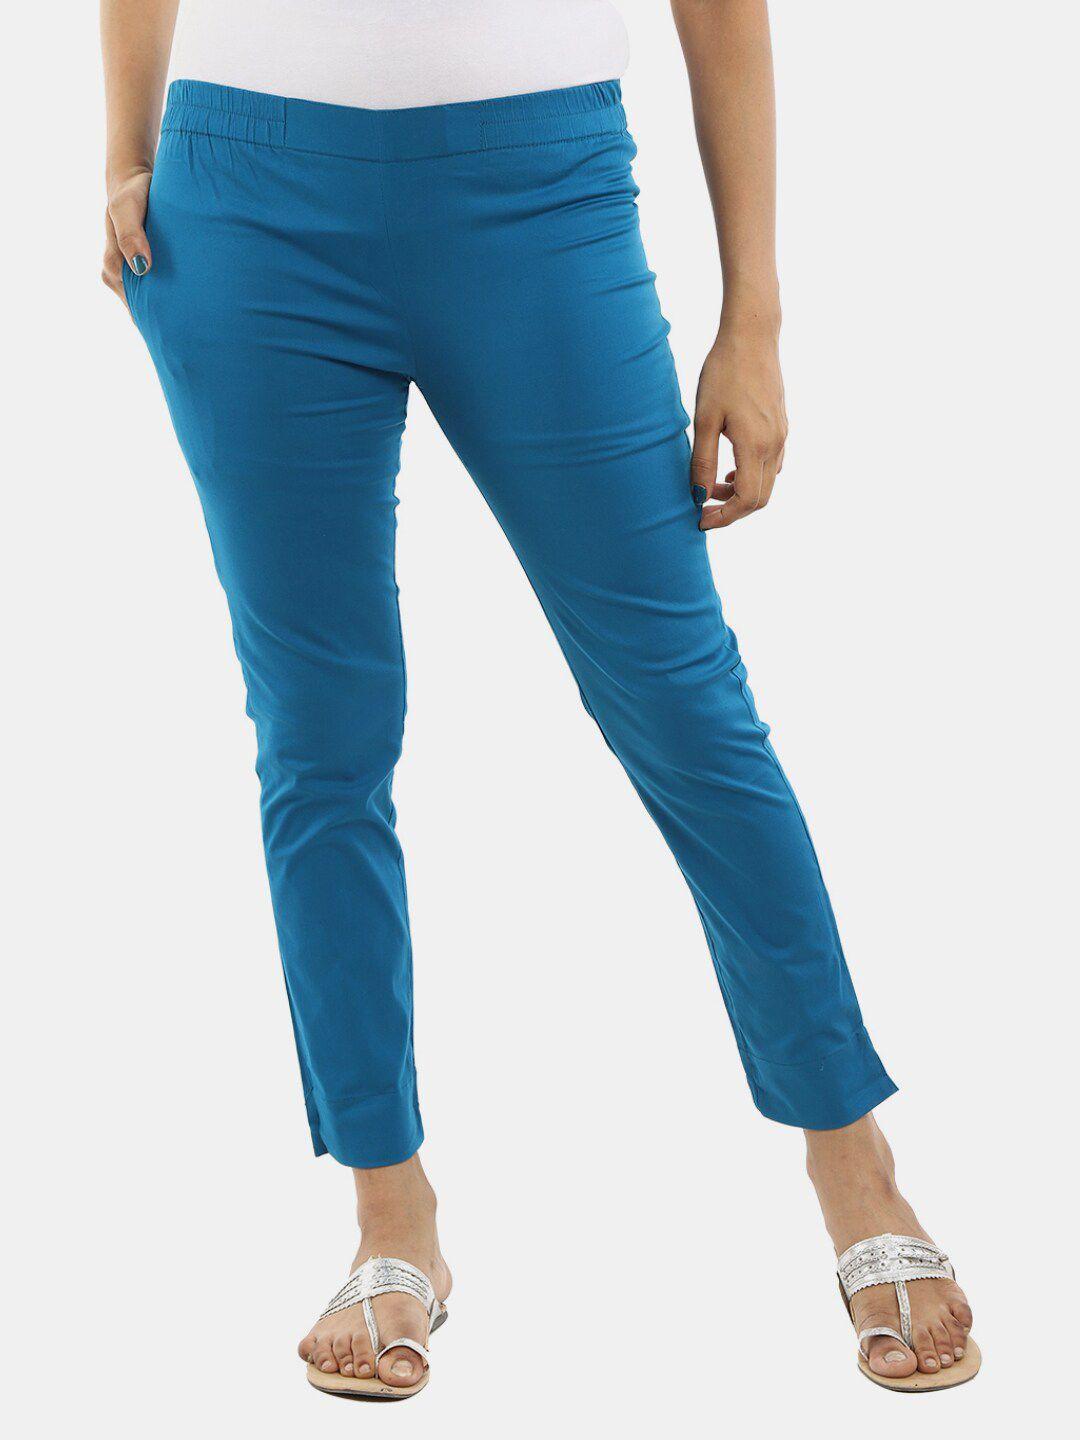 v-mart women blue solid cotton trousers